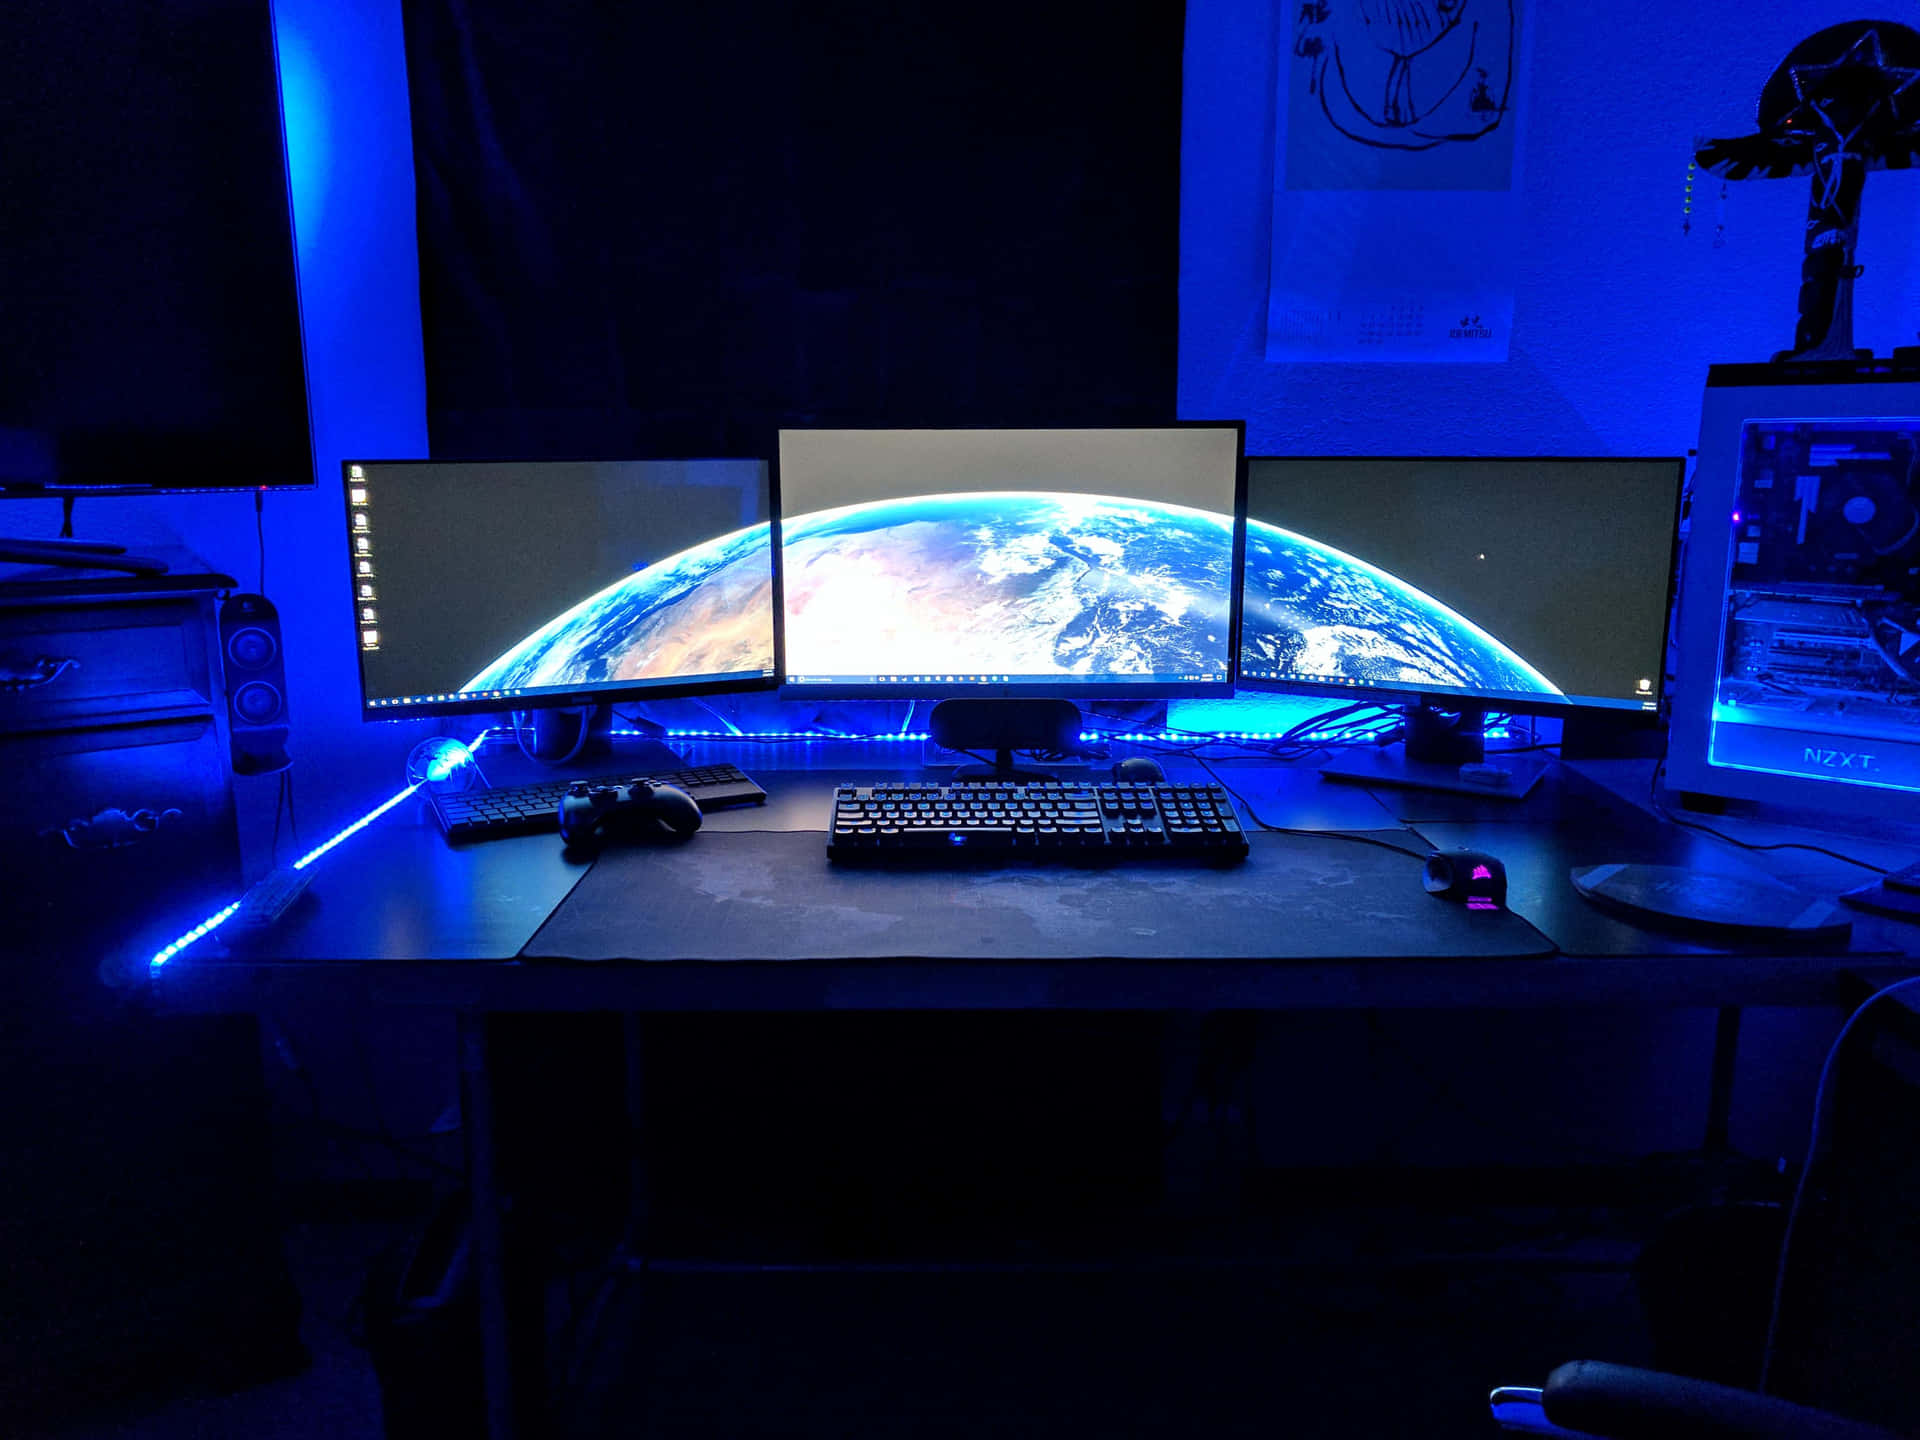 Brightly lit monitor against a dark background